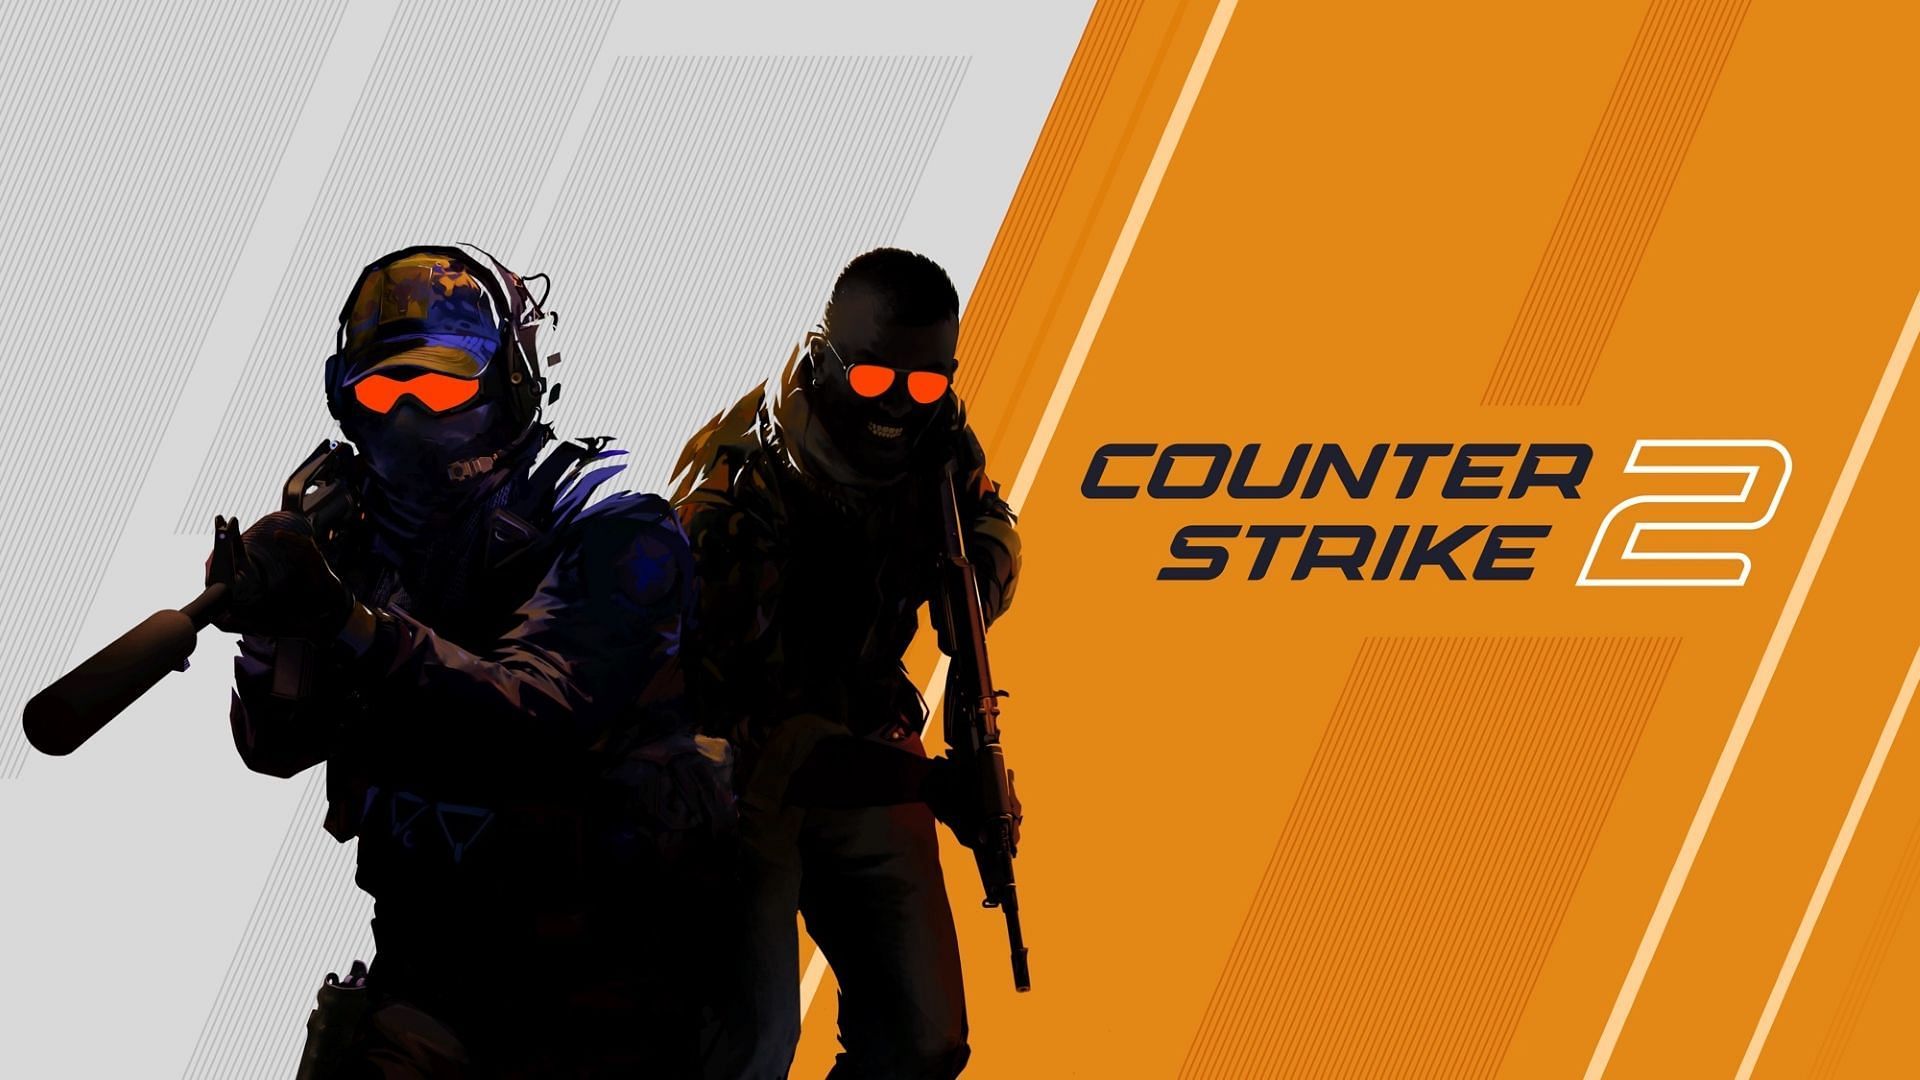 Counter Strike 2 (Image via Valve)